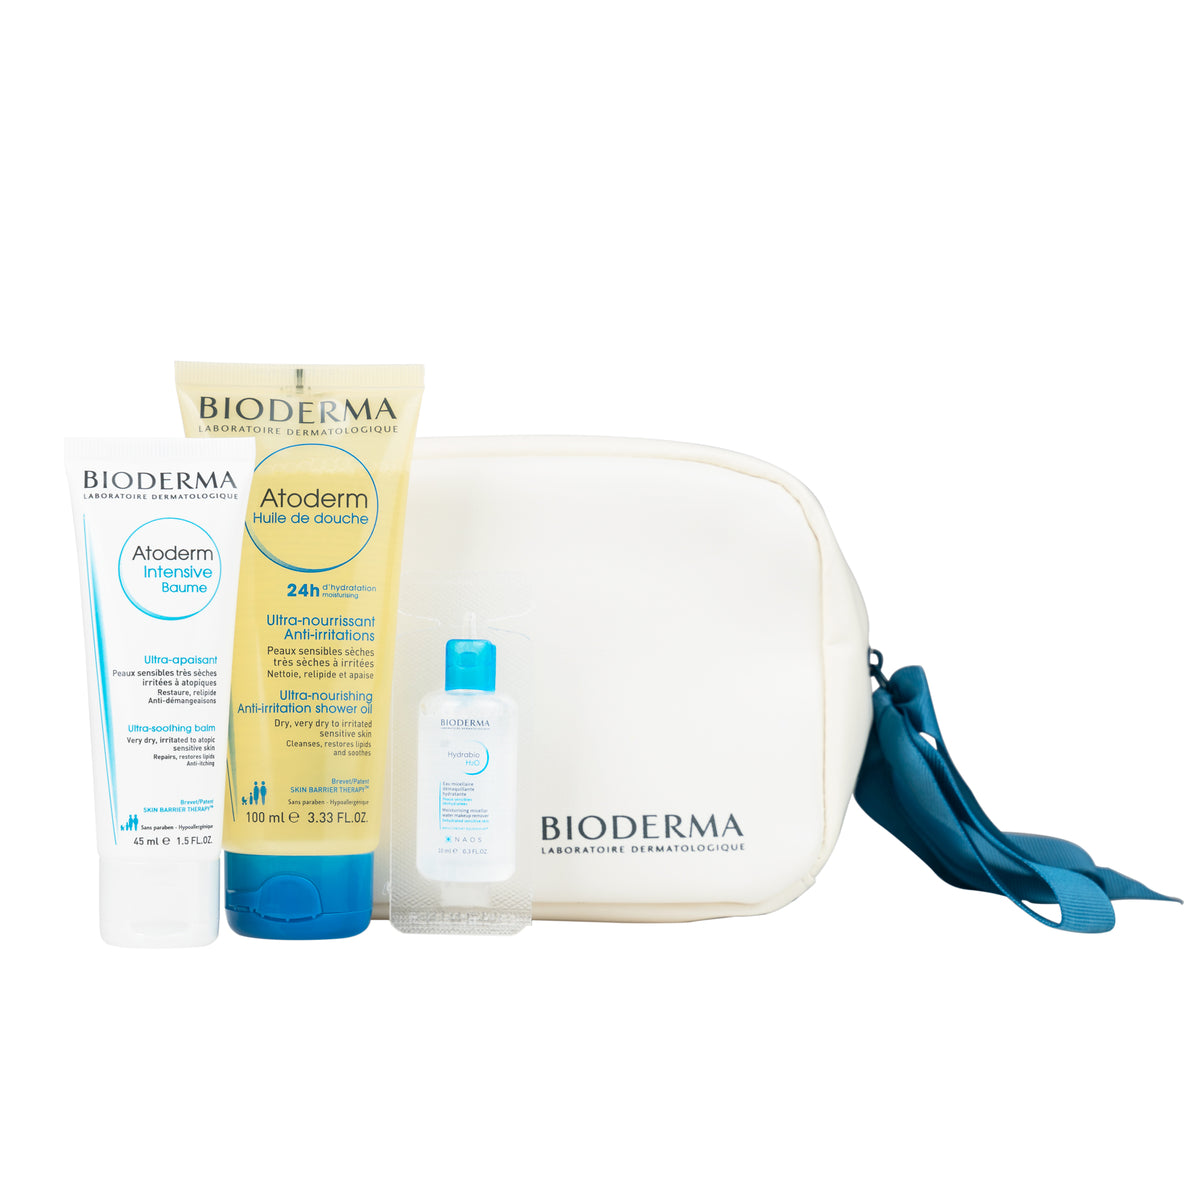 Bioderma GWP Winter Skincare Routine Set #10083290